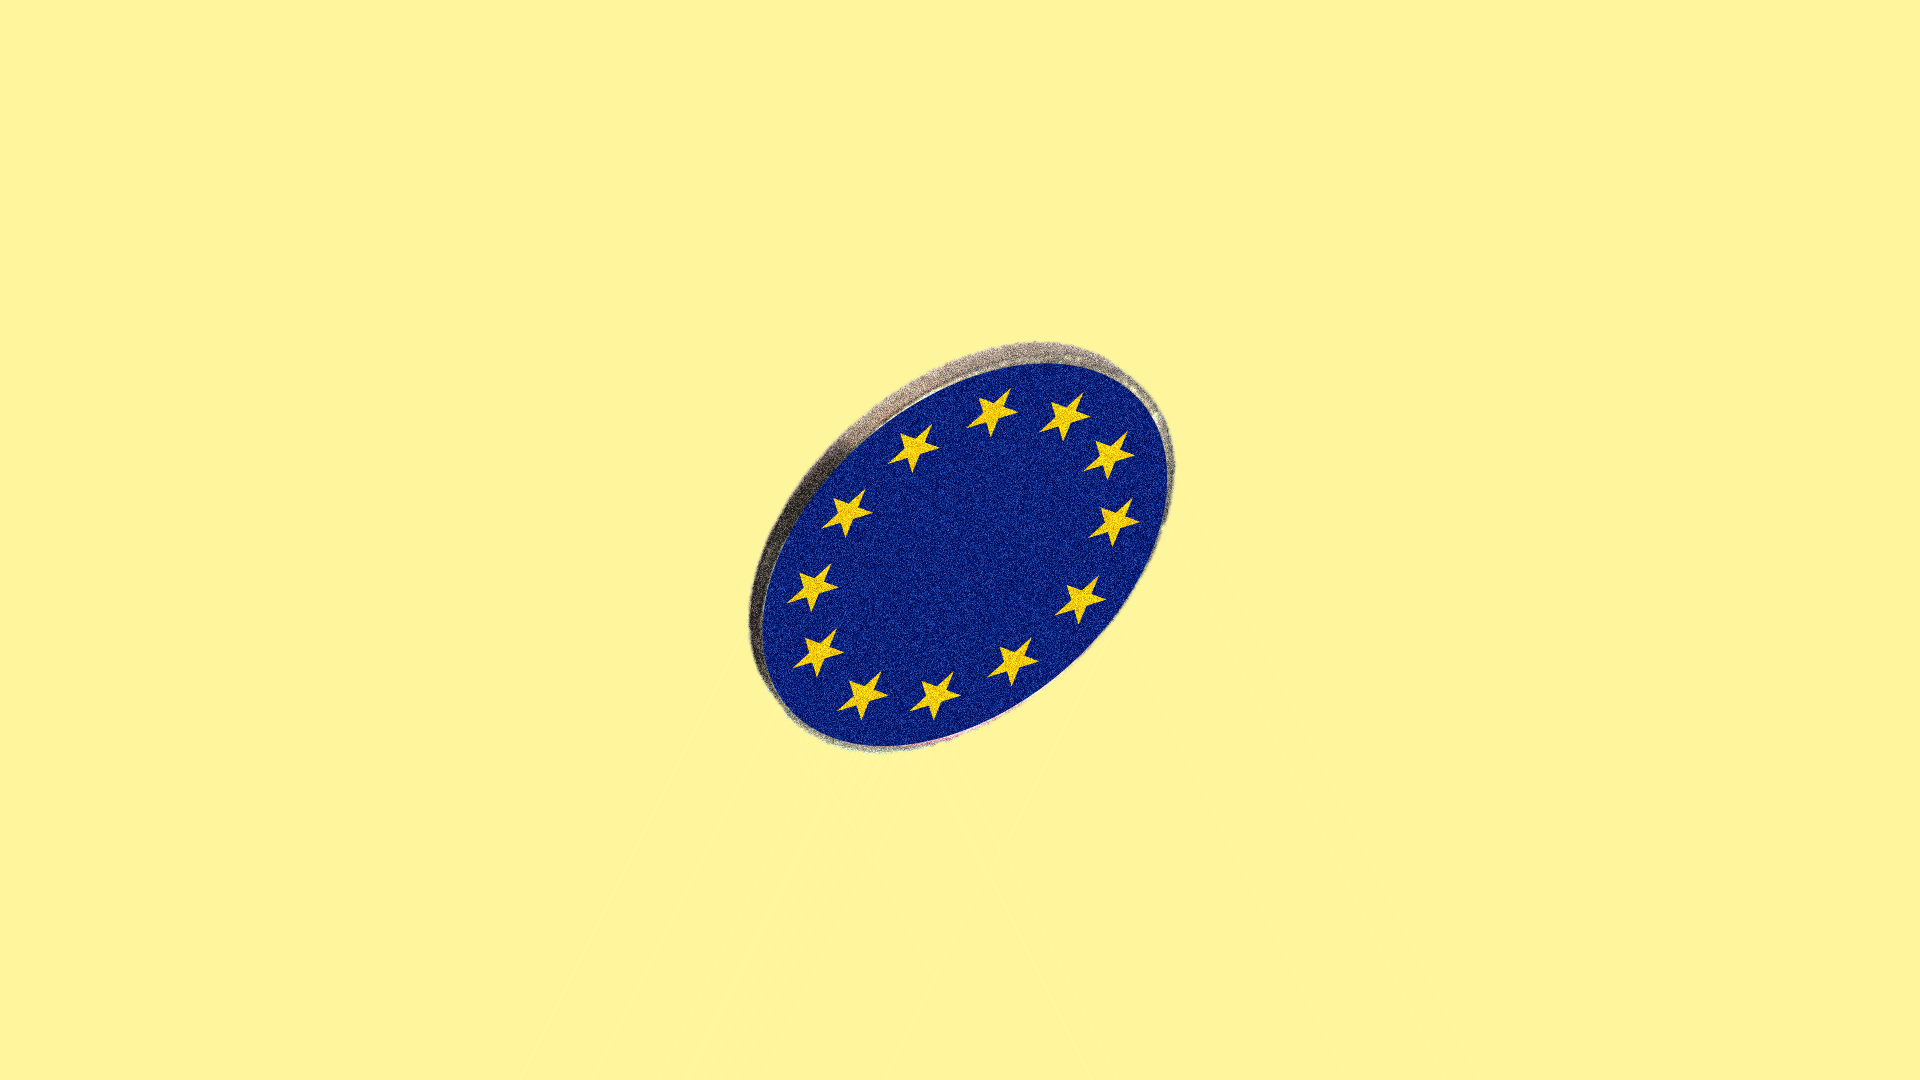 UK/EU coin flipping